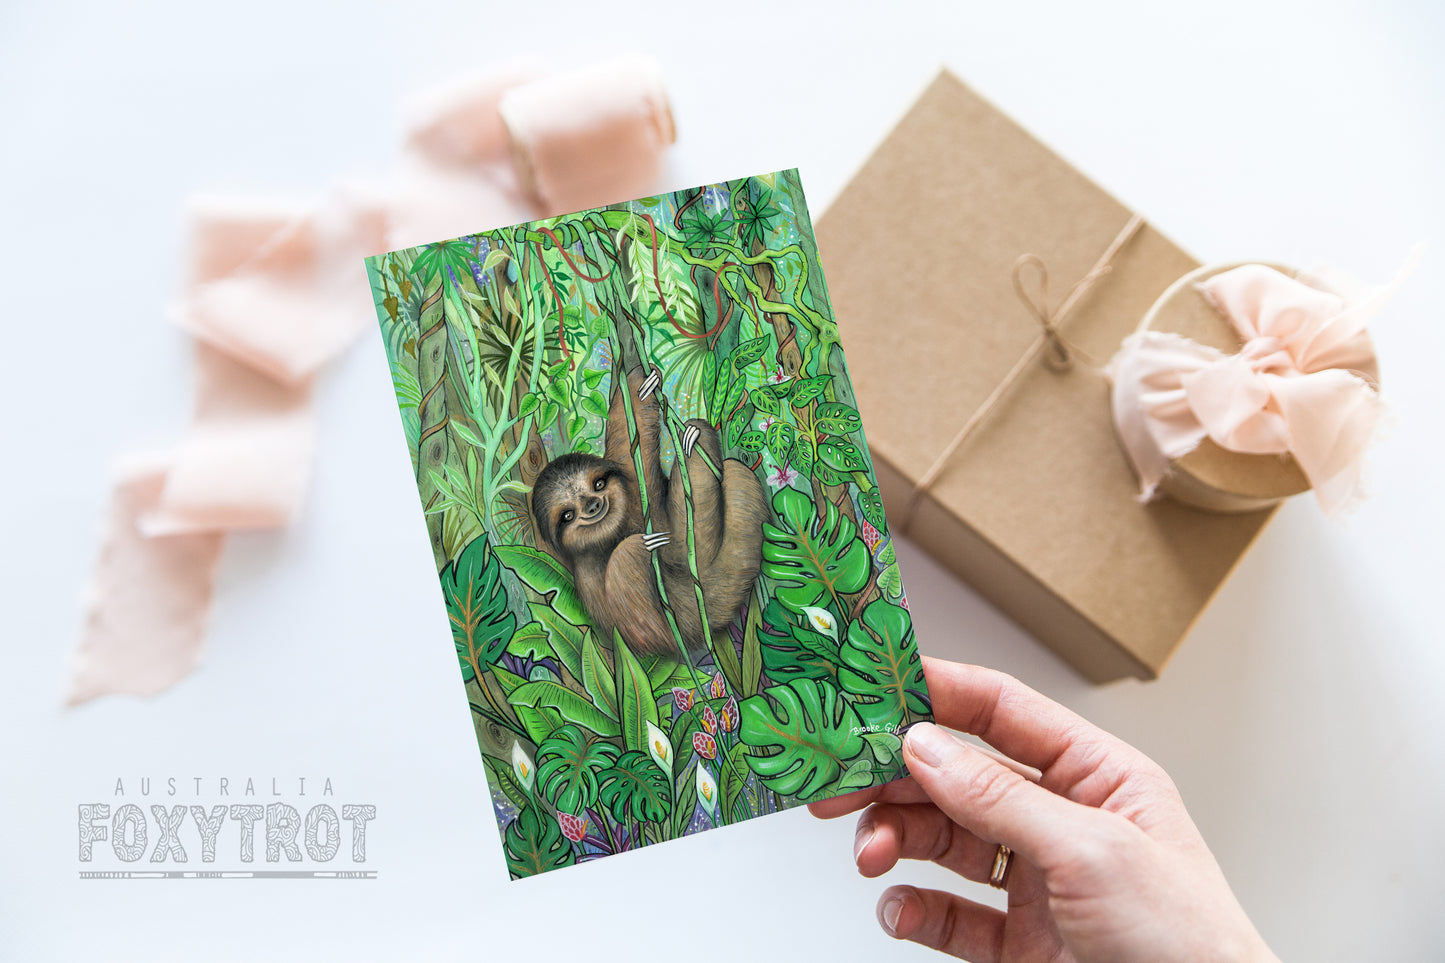 Jungle Sloth Card